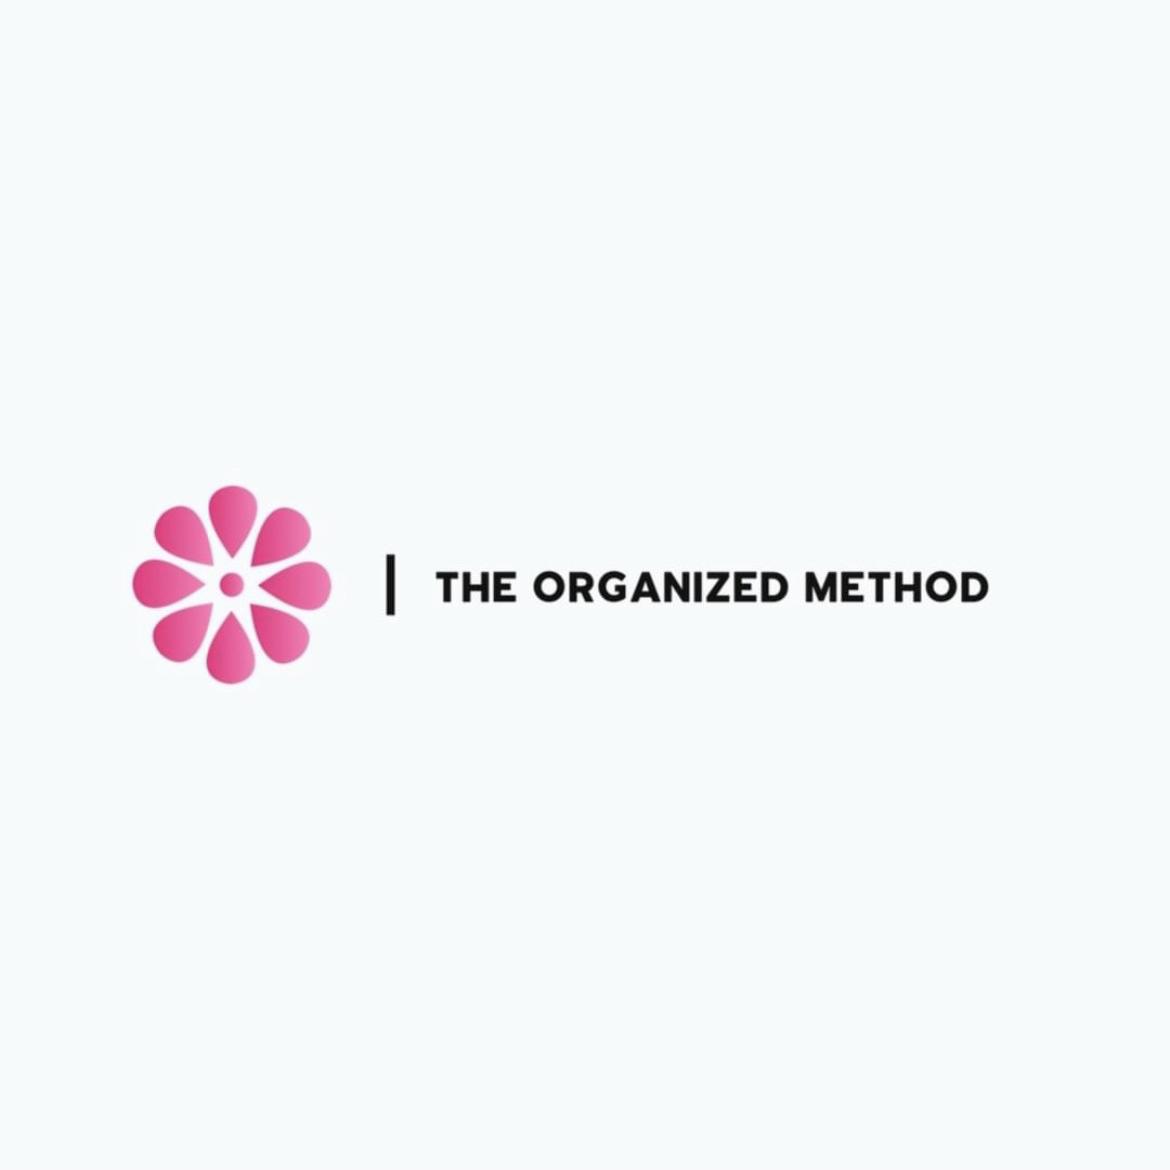 OrganizedMethod's images